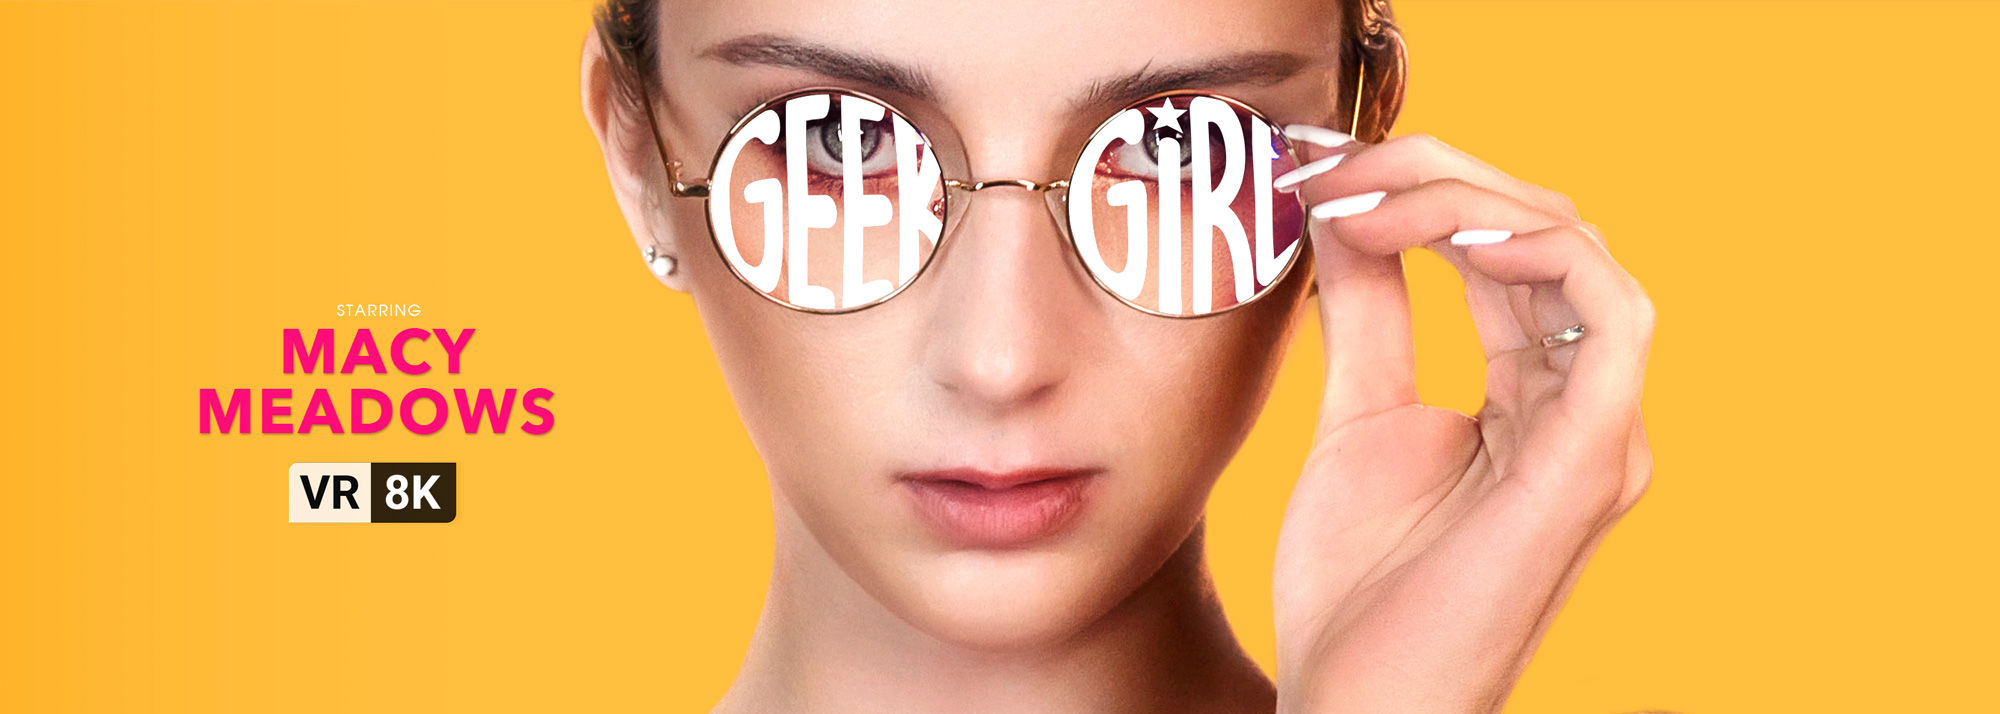 Geek Girl with Macy Meadows  Slideshow